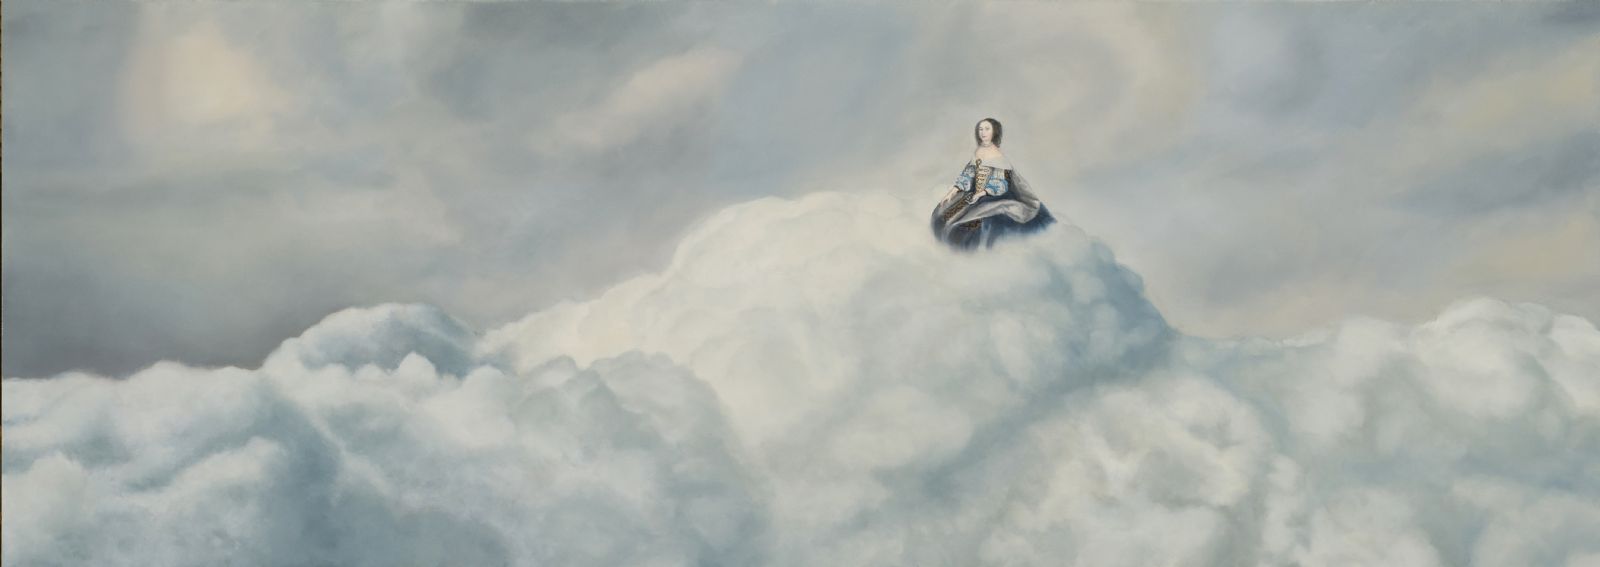 Cloud Nine by Rory Macdonald